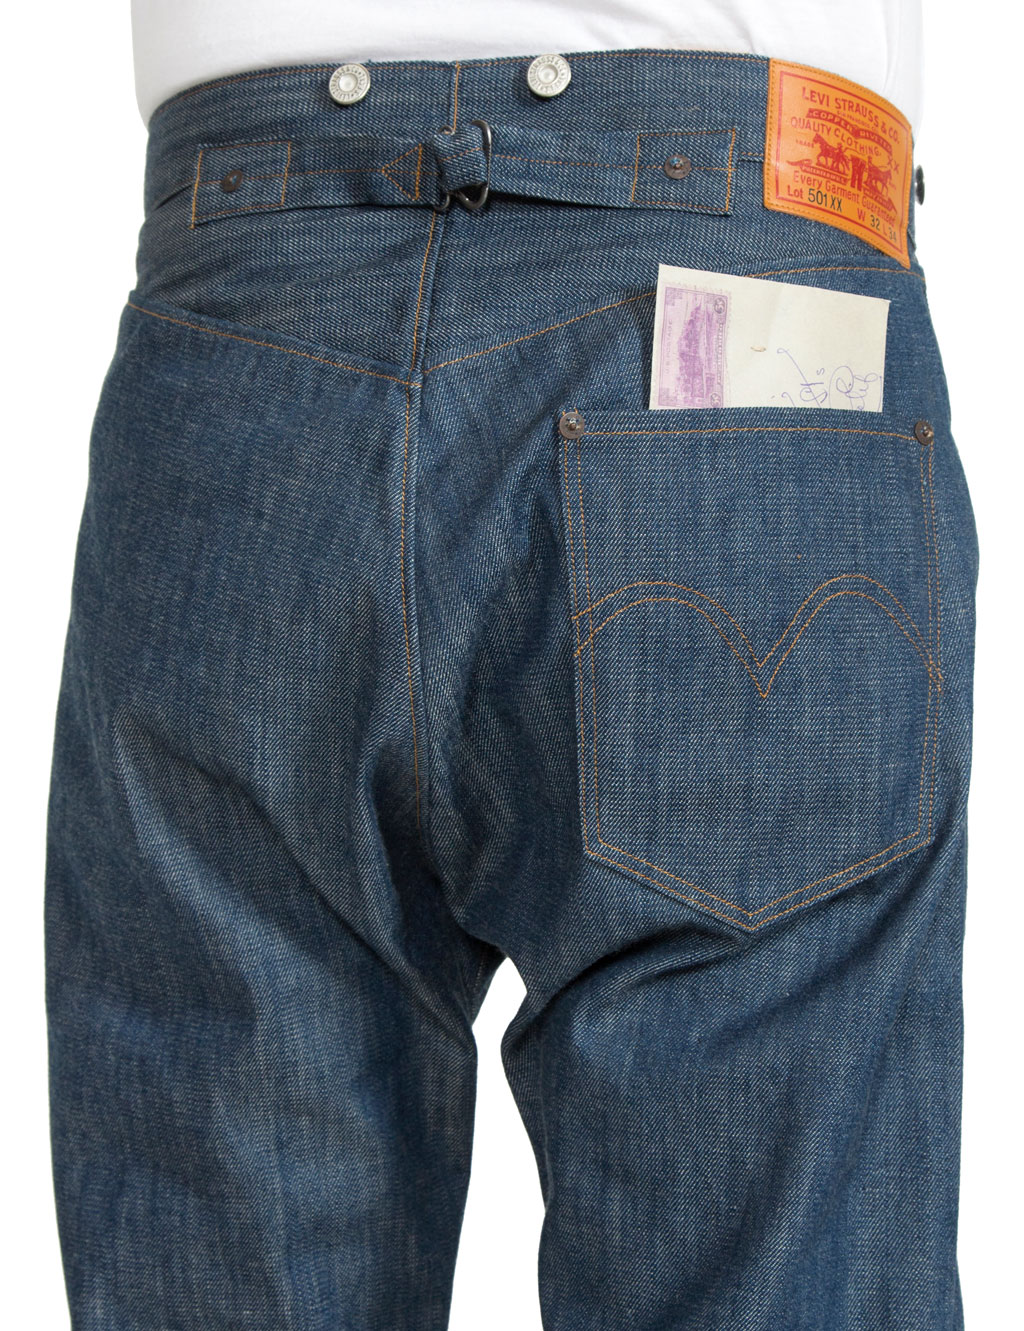 jeans levis vintage online -